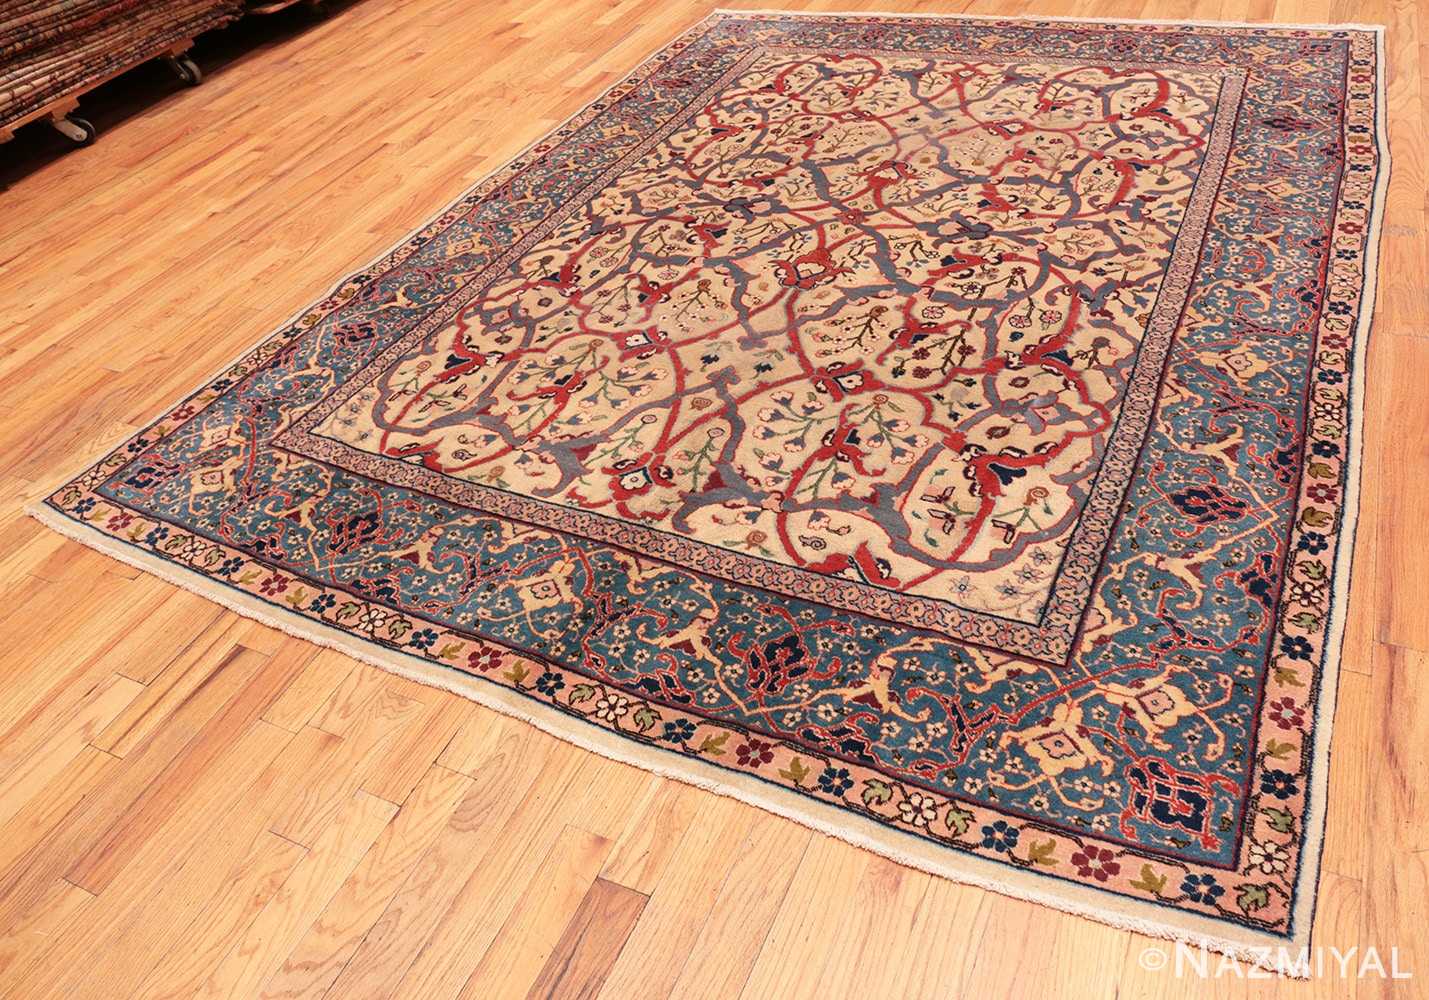 Full Antique Persian Tabriz rug 47432 by Nazmiyal